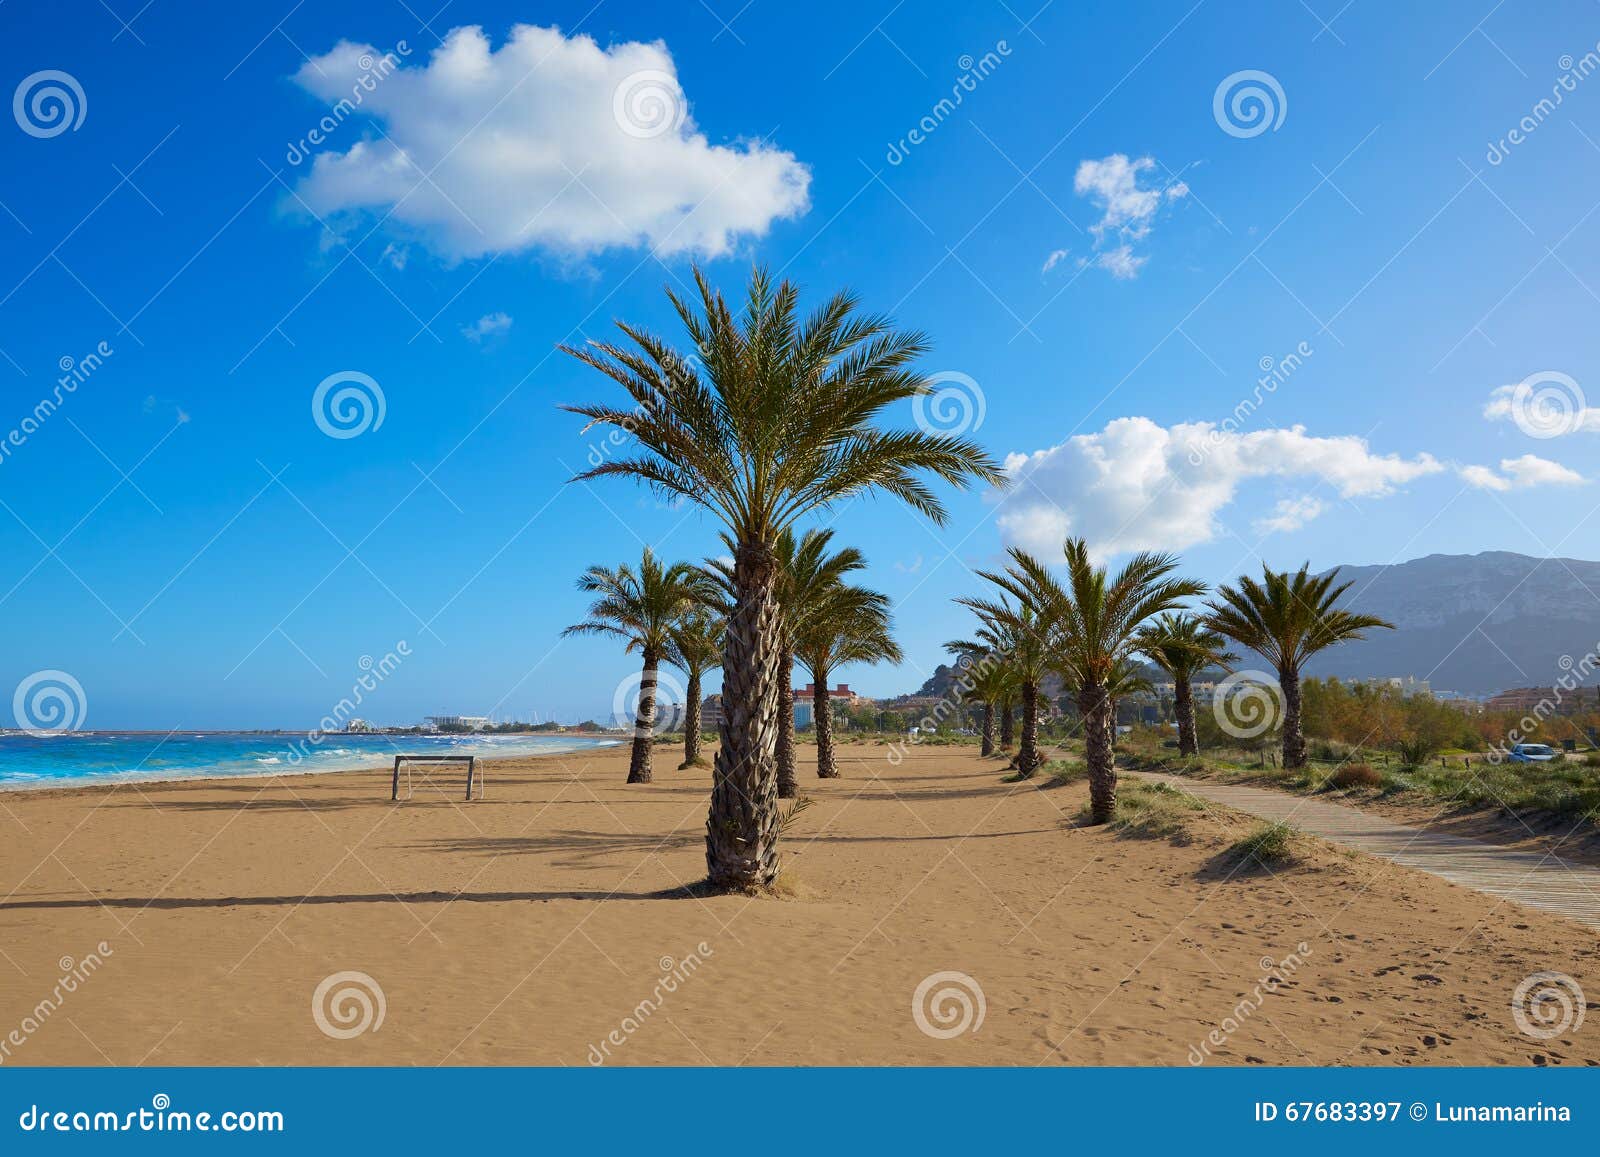 denia beach las marinas with palm trees alicante